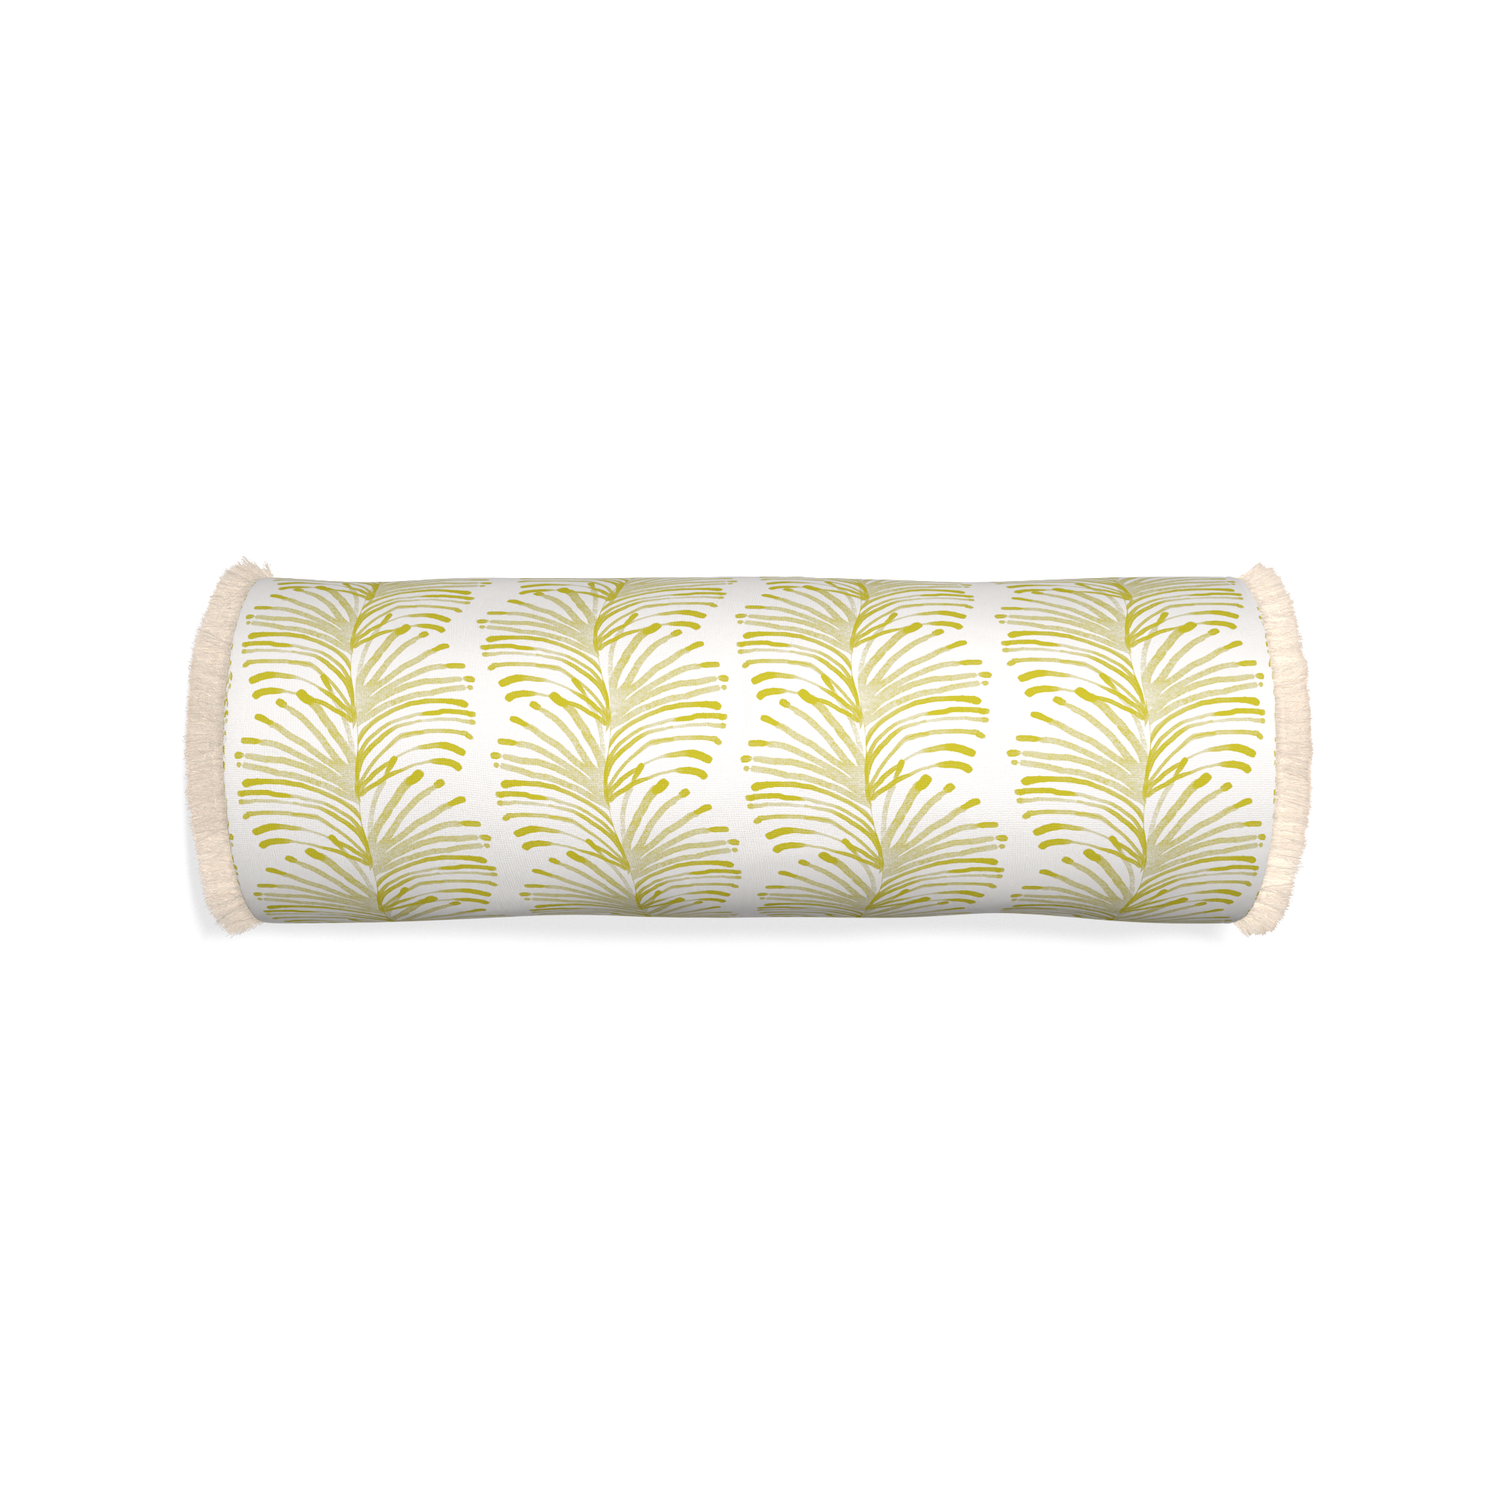 Bolster emma chartreuse custom pillow with cream fringe on white background